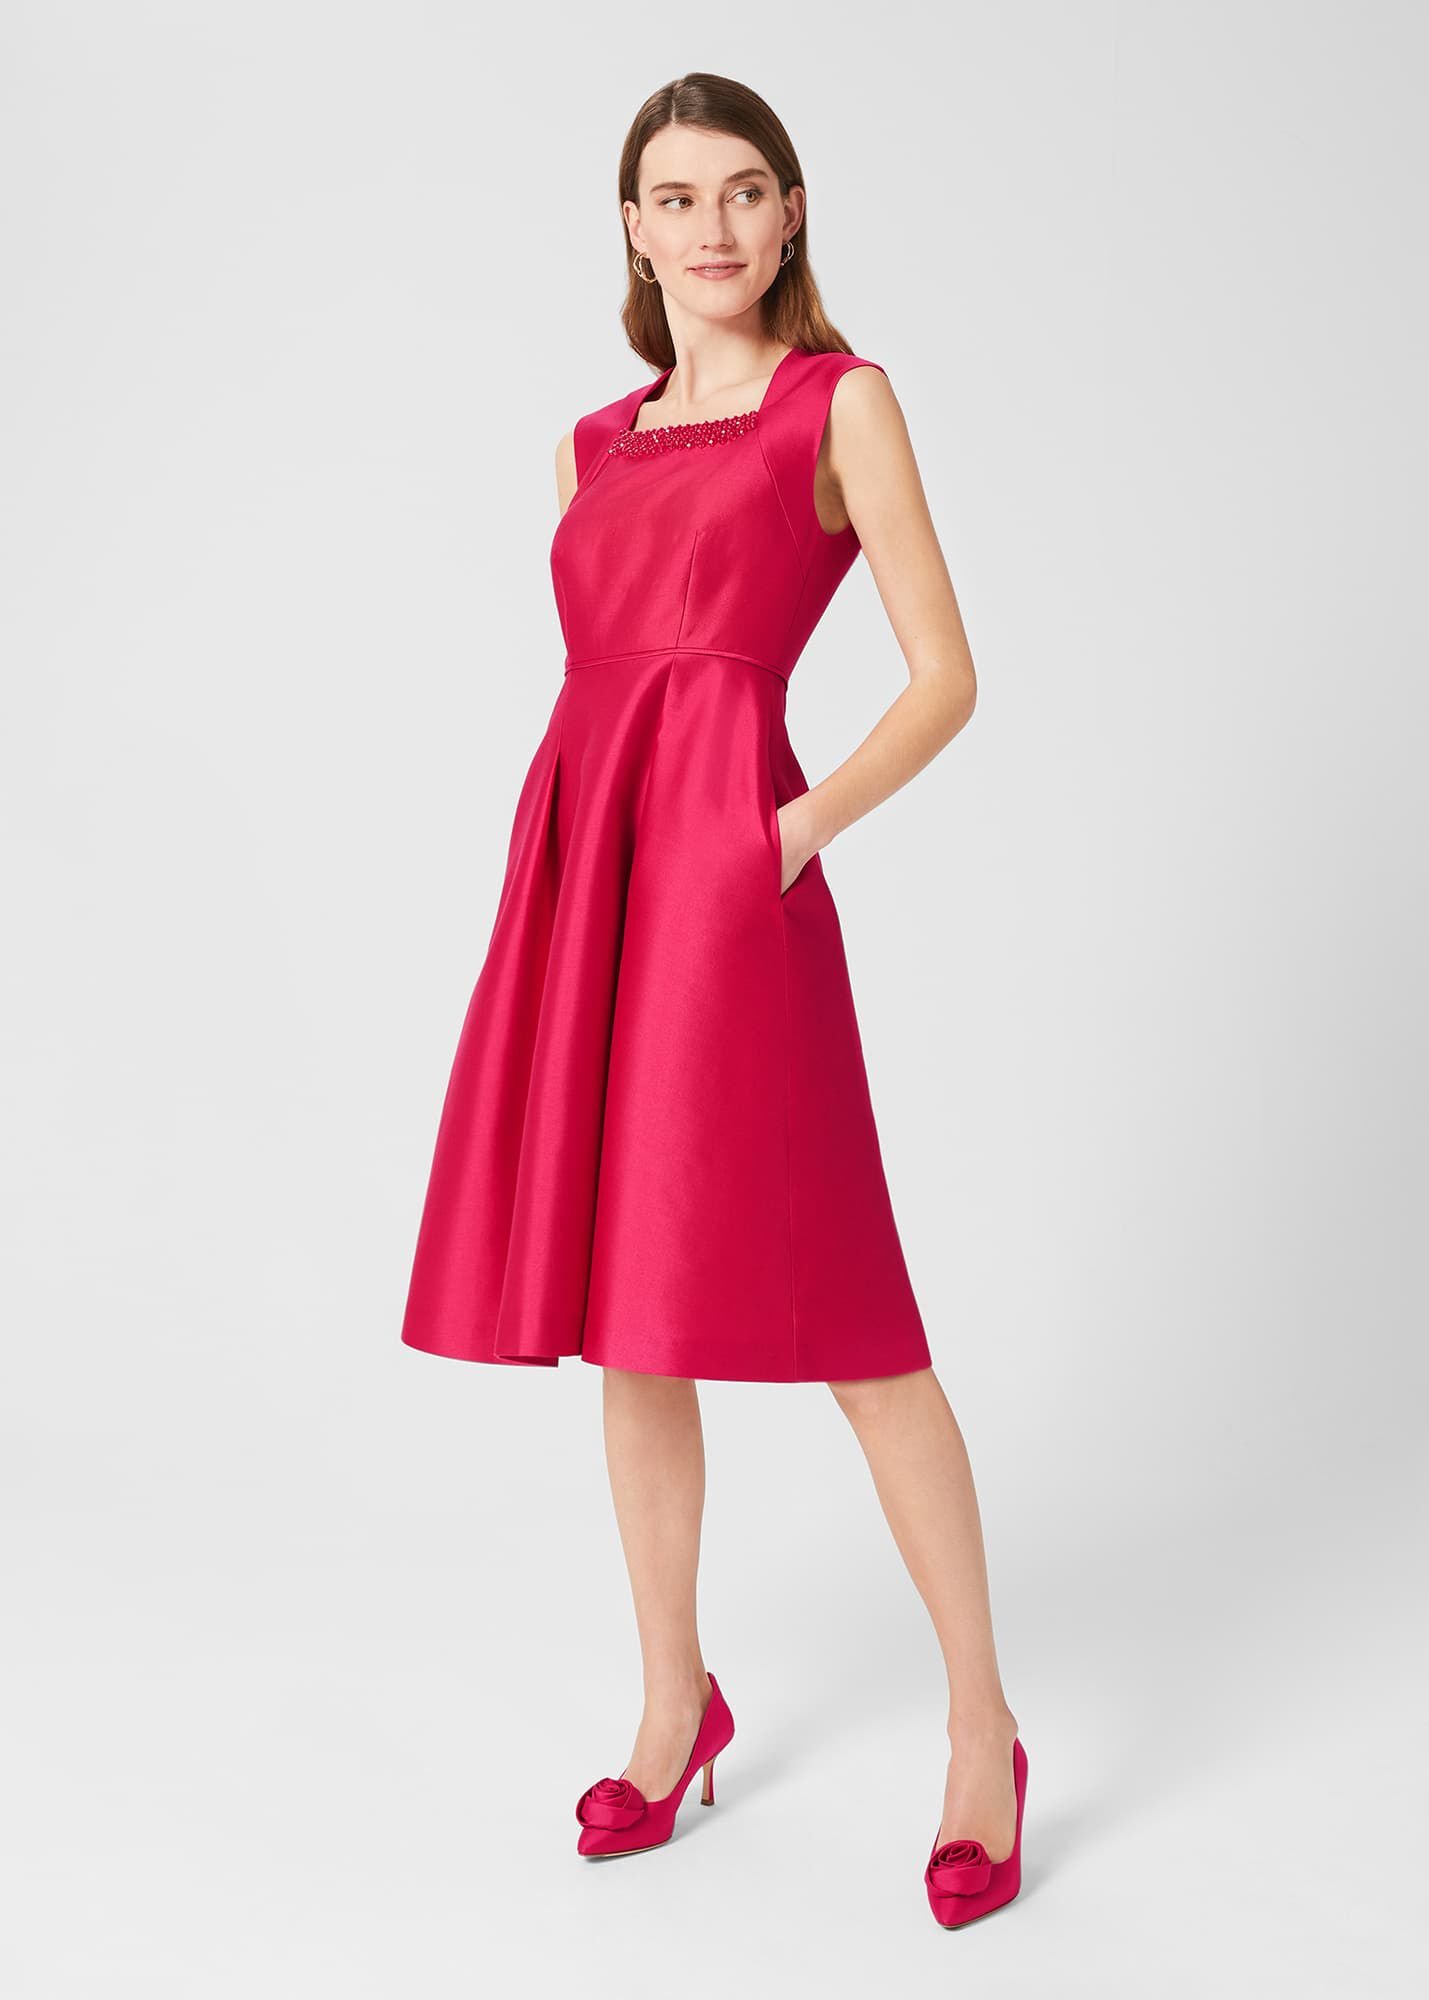 Hobbs London Julietta Silk Blend Fit And Flare Dress Fuchsia Pink Luxury Occasionwear